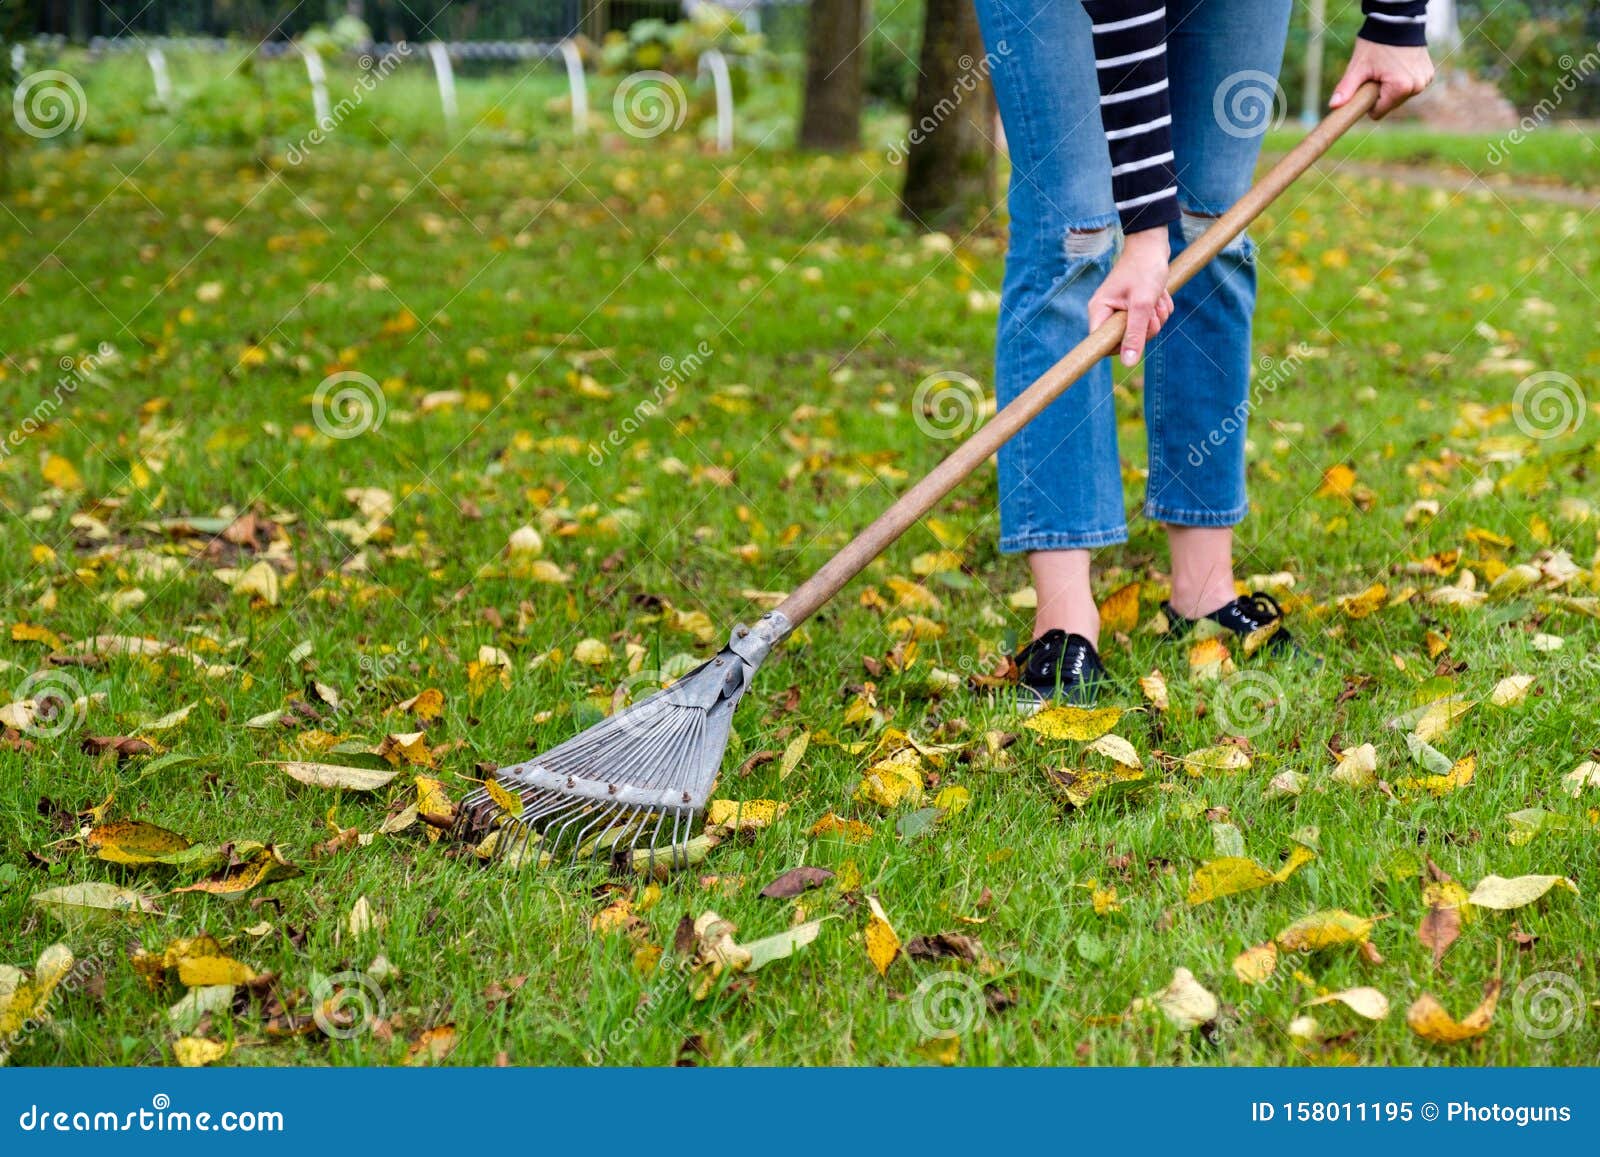 Gardener Woman Raking Fallen Leaves in Backyard. Woman Standing with ...